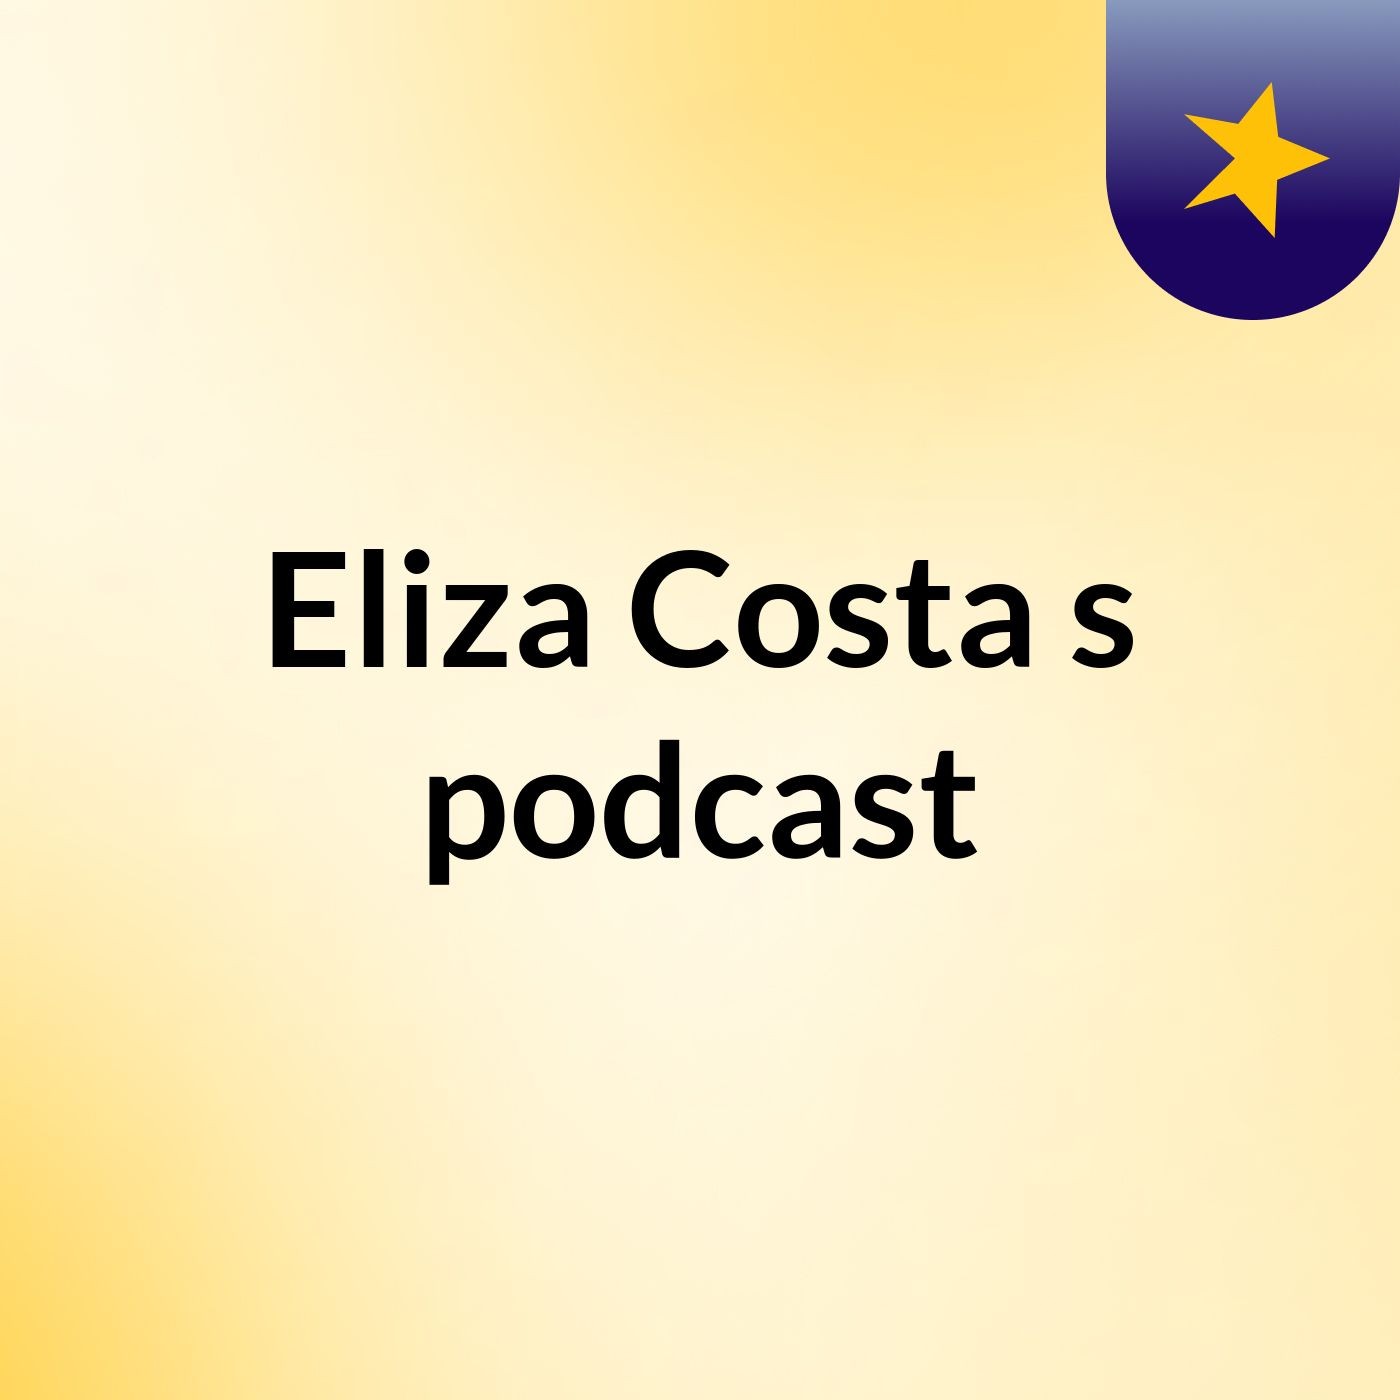 Eliza Costa's podcast